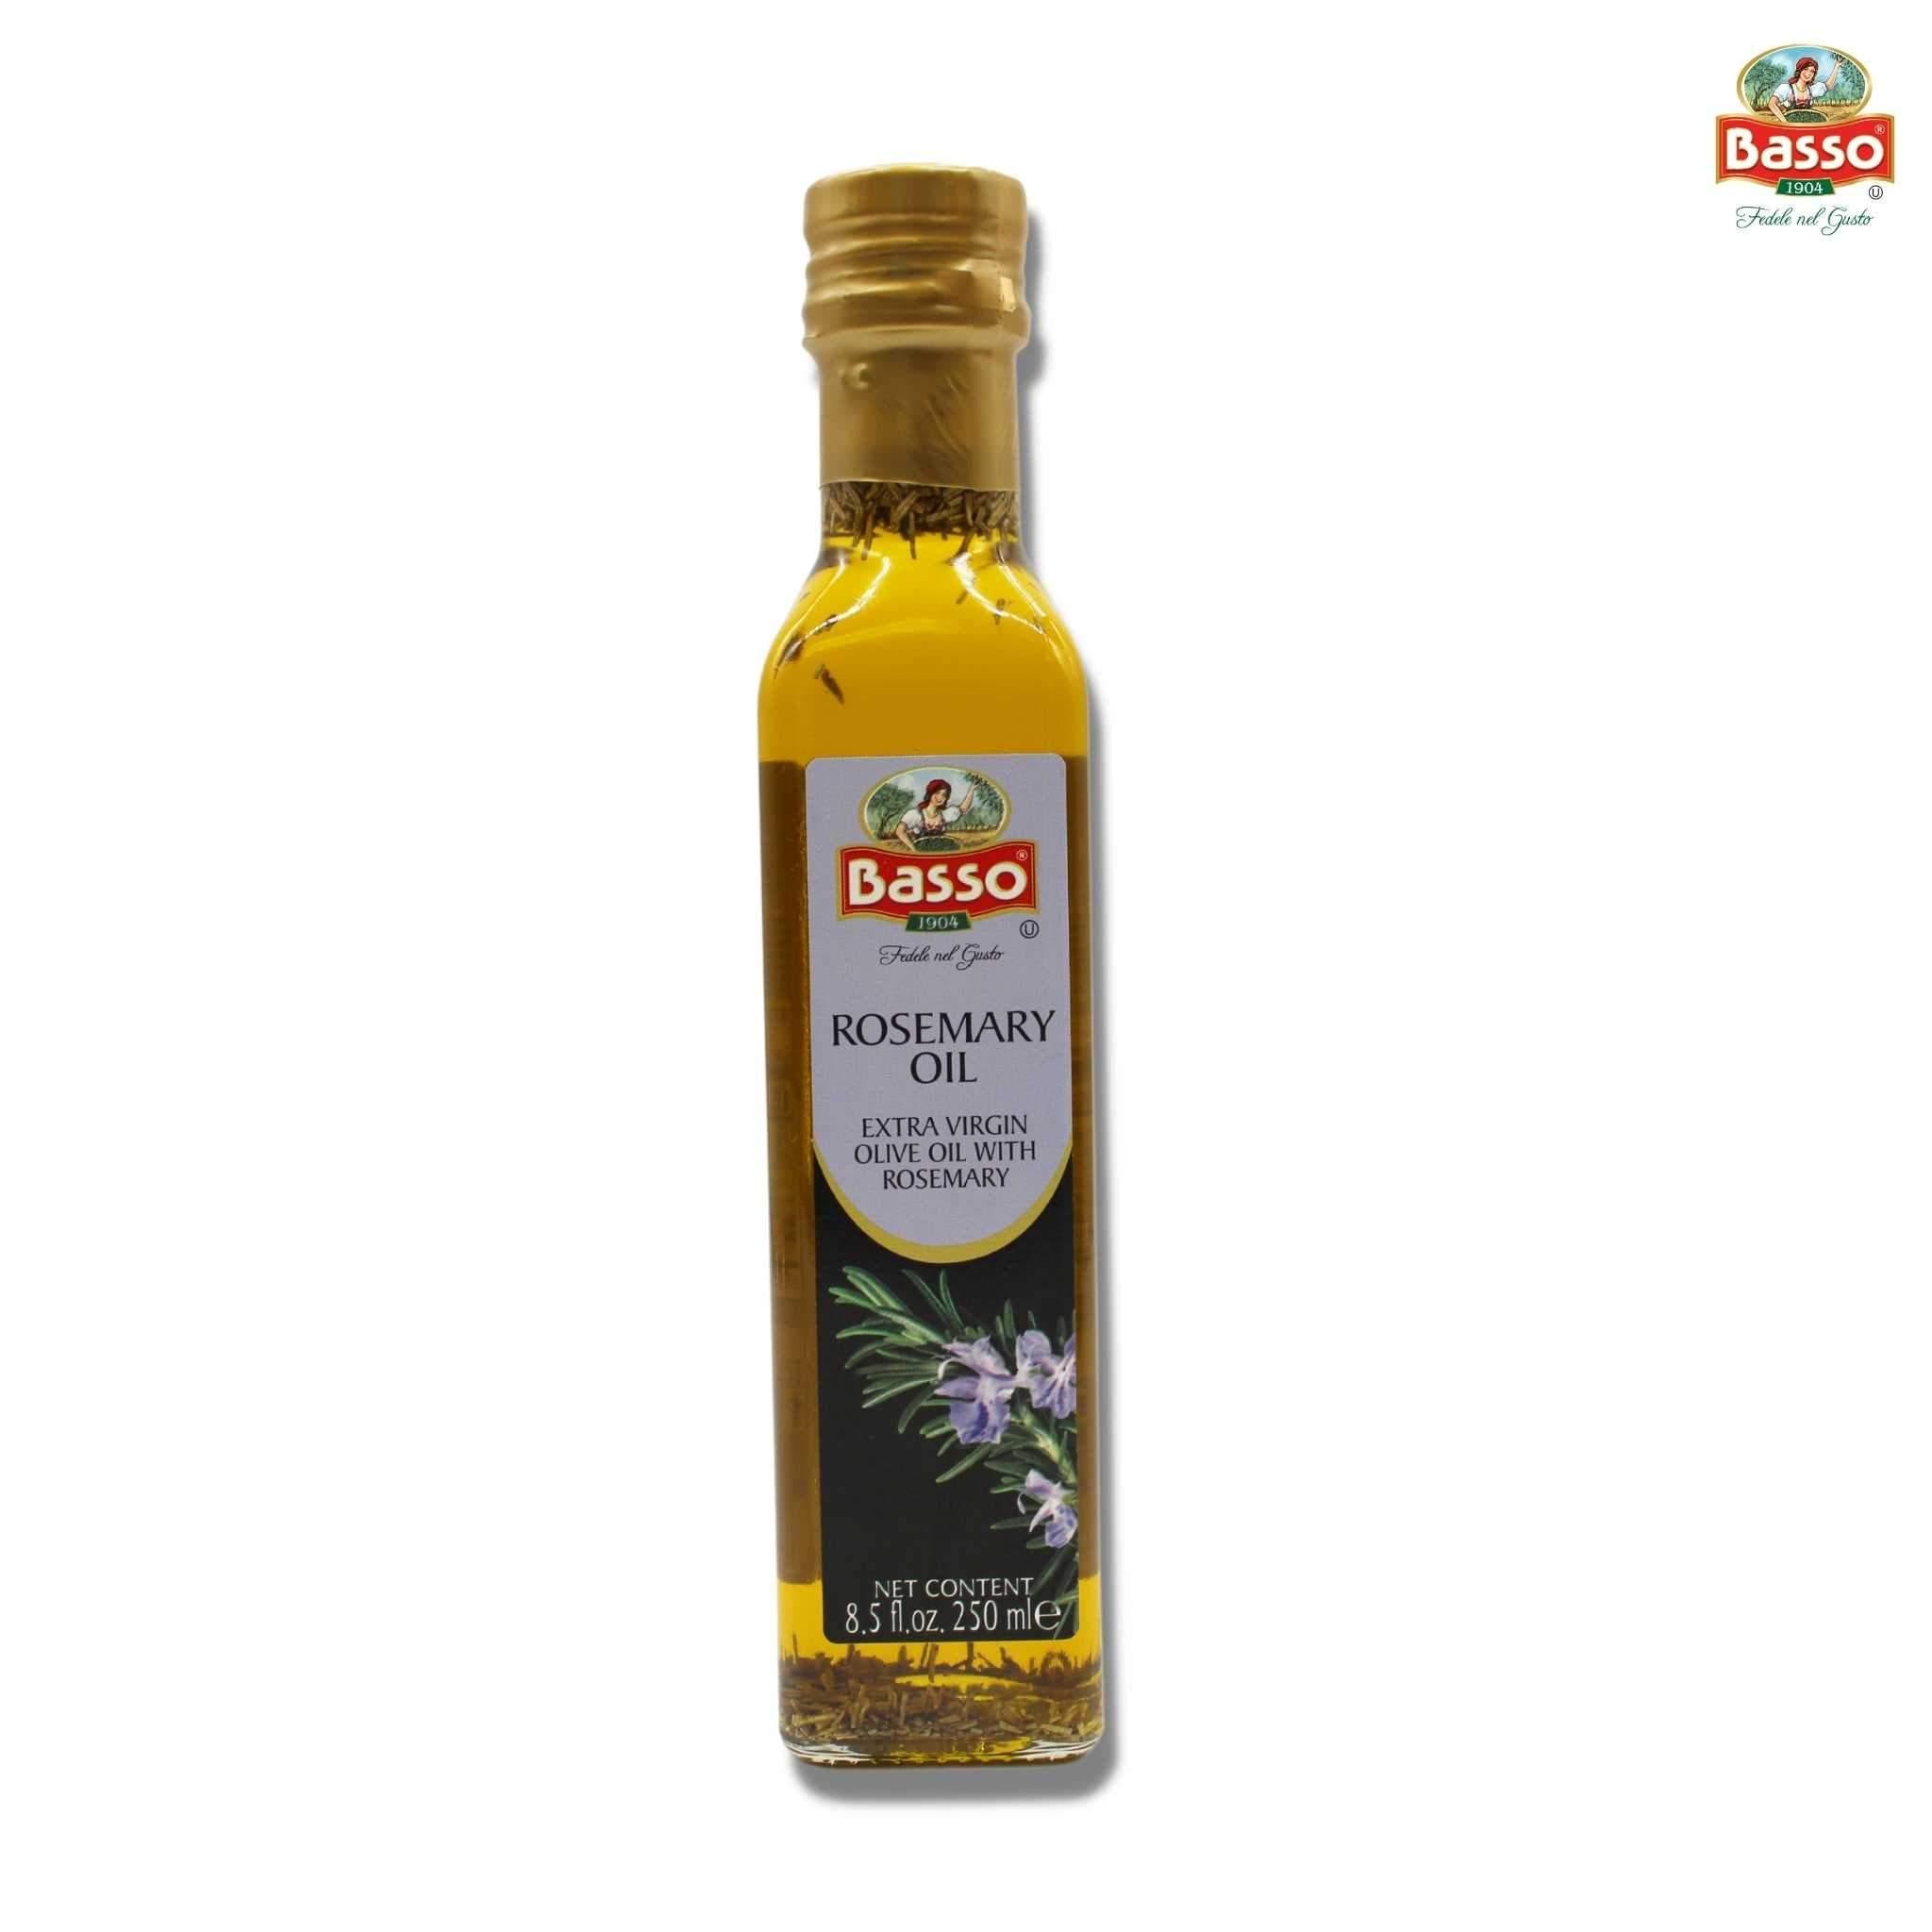 Basso Extra Virgin Olive Oil Rosemary 8.5 fl oz